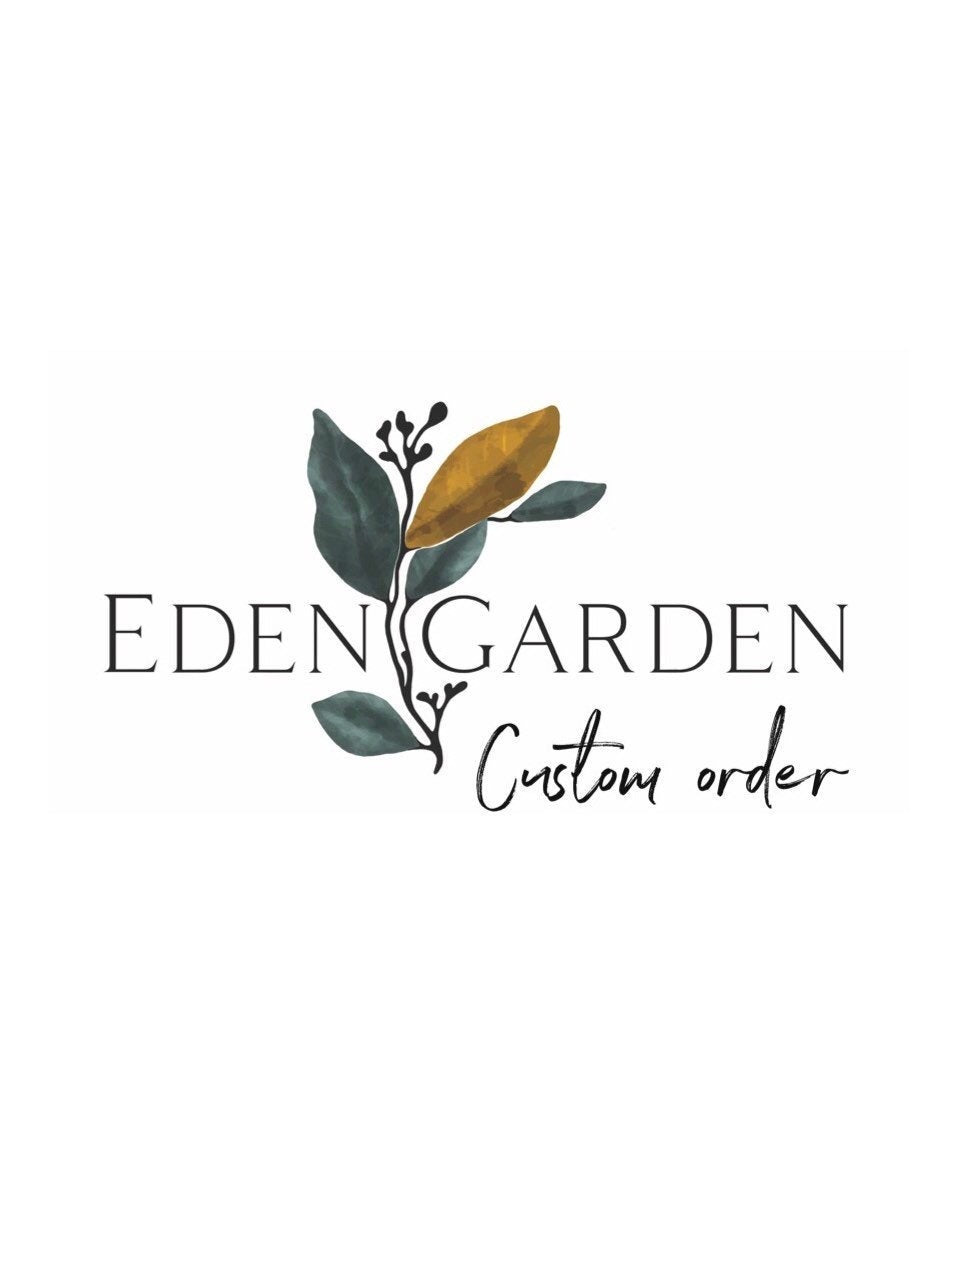 Deposit payment for custom order: padparadscha sapphire ring - Eden Garden Jewelry™